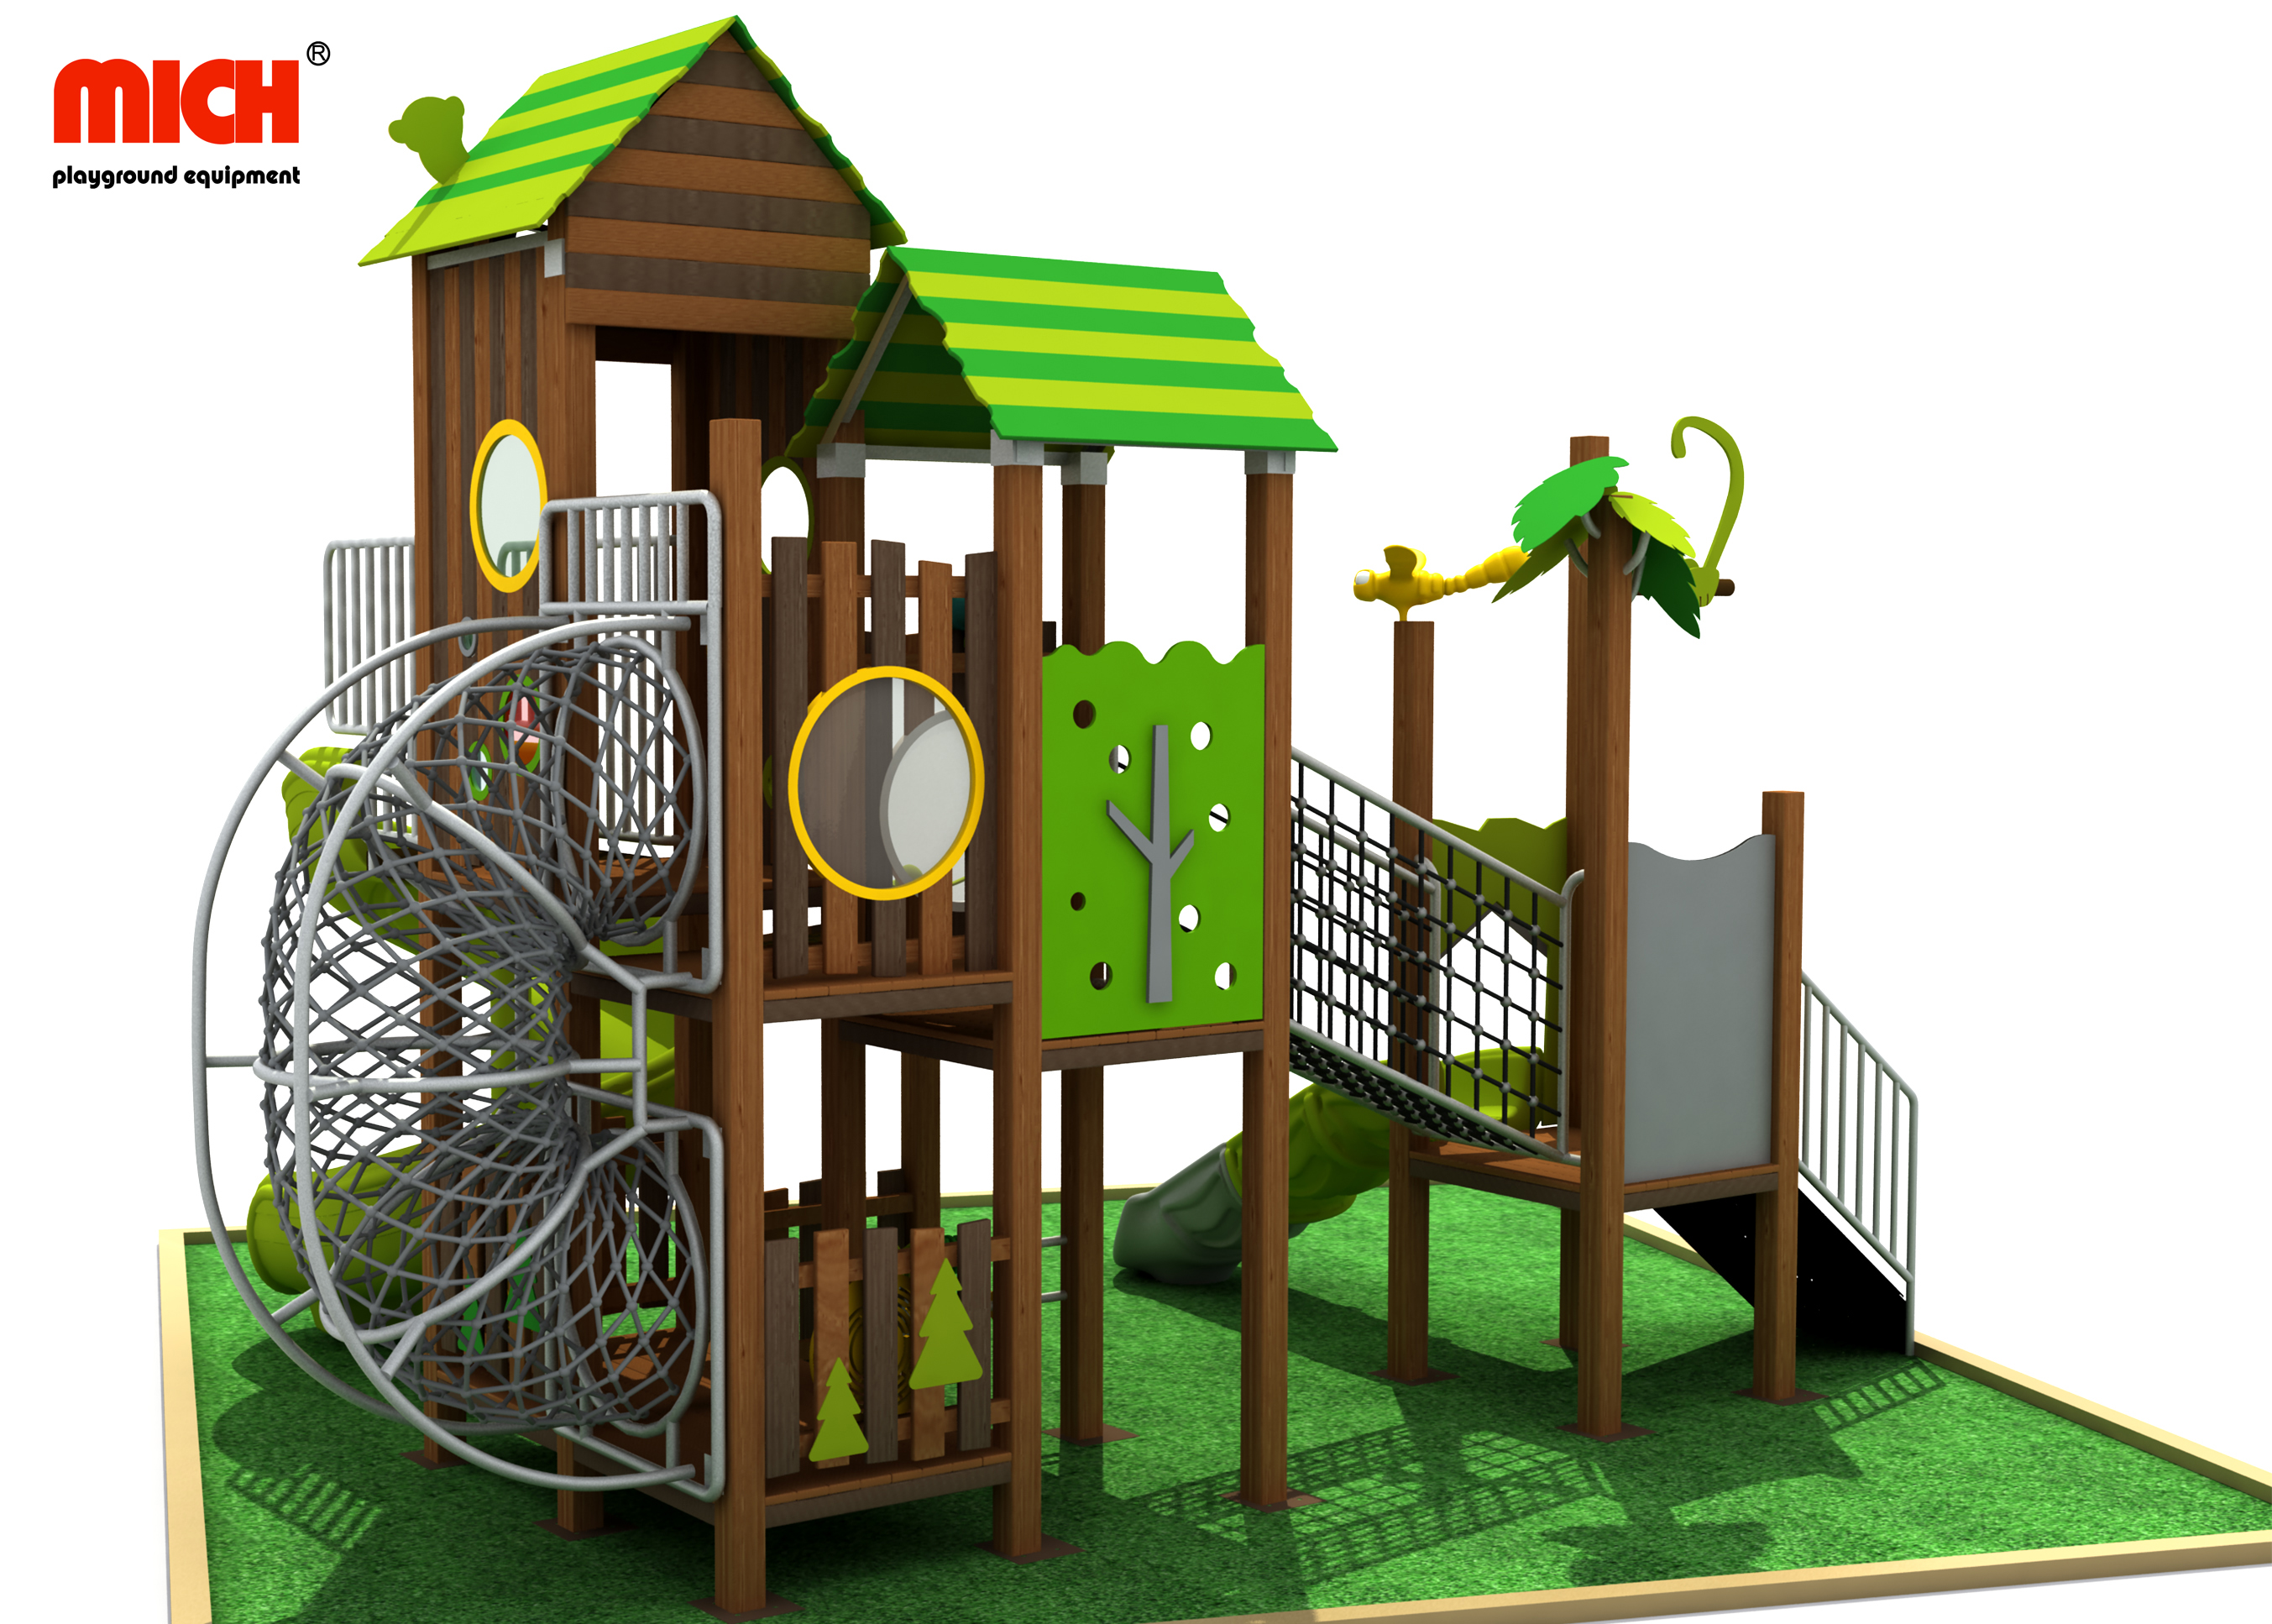 WPC Series Public Area Kids Outdoor Playground